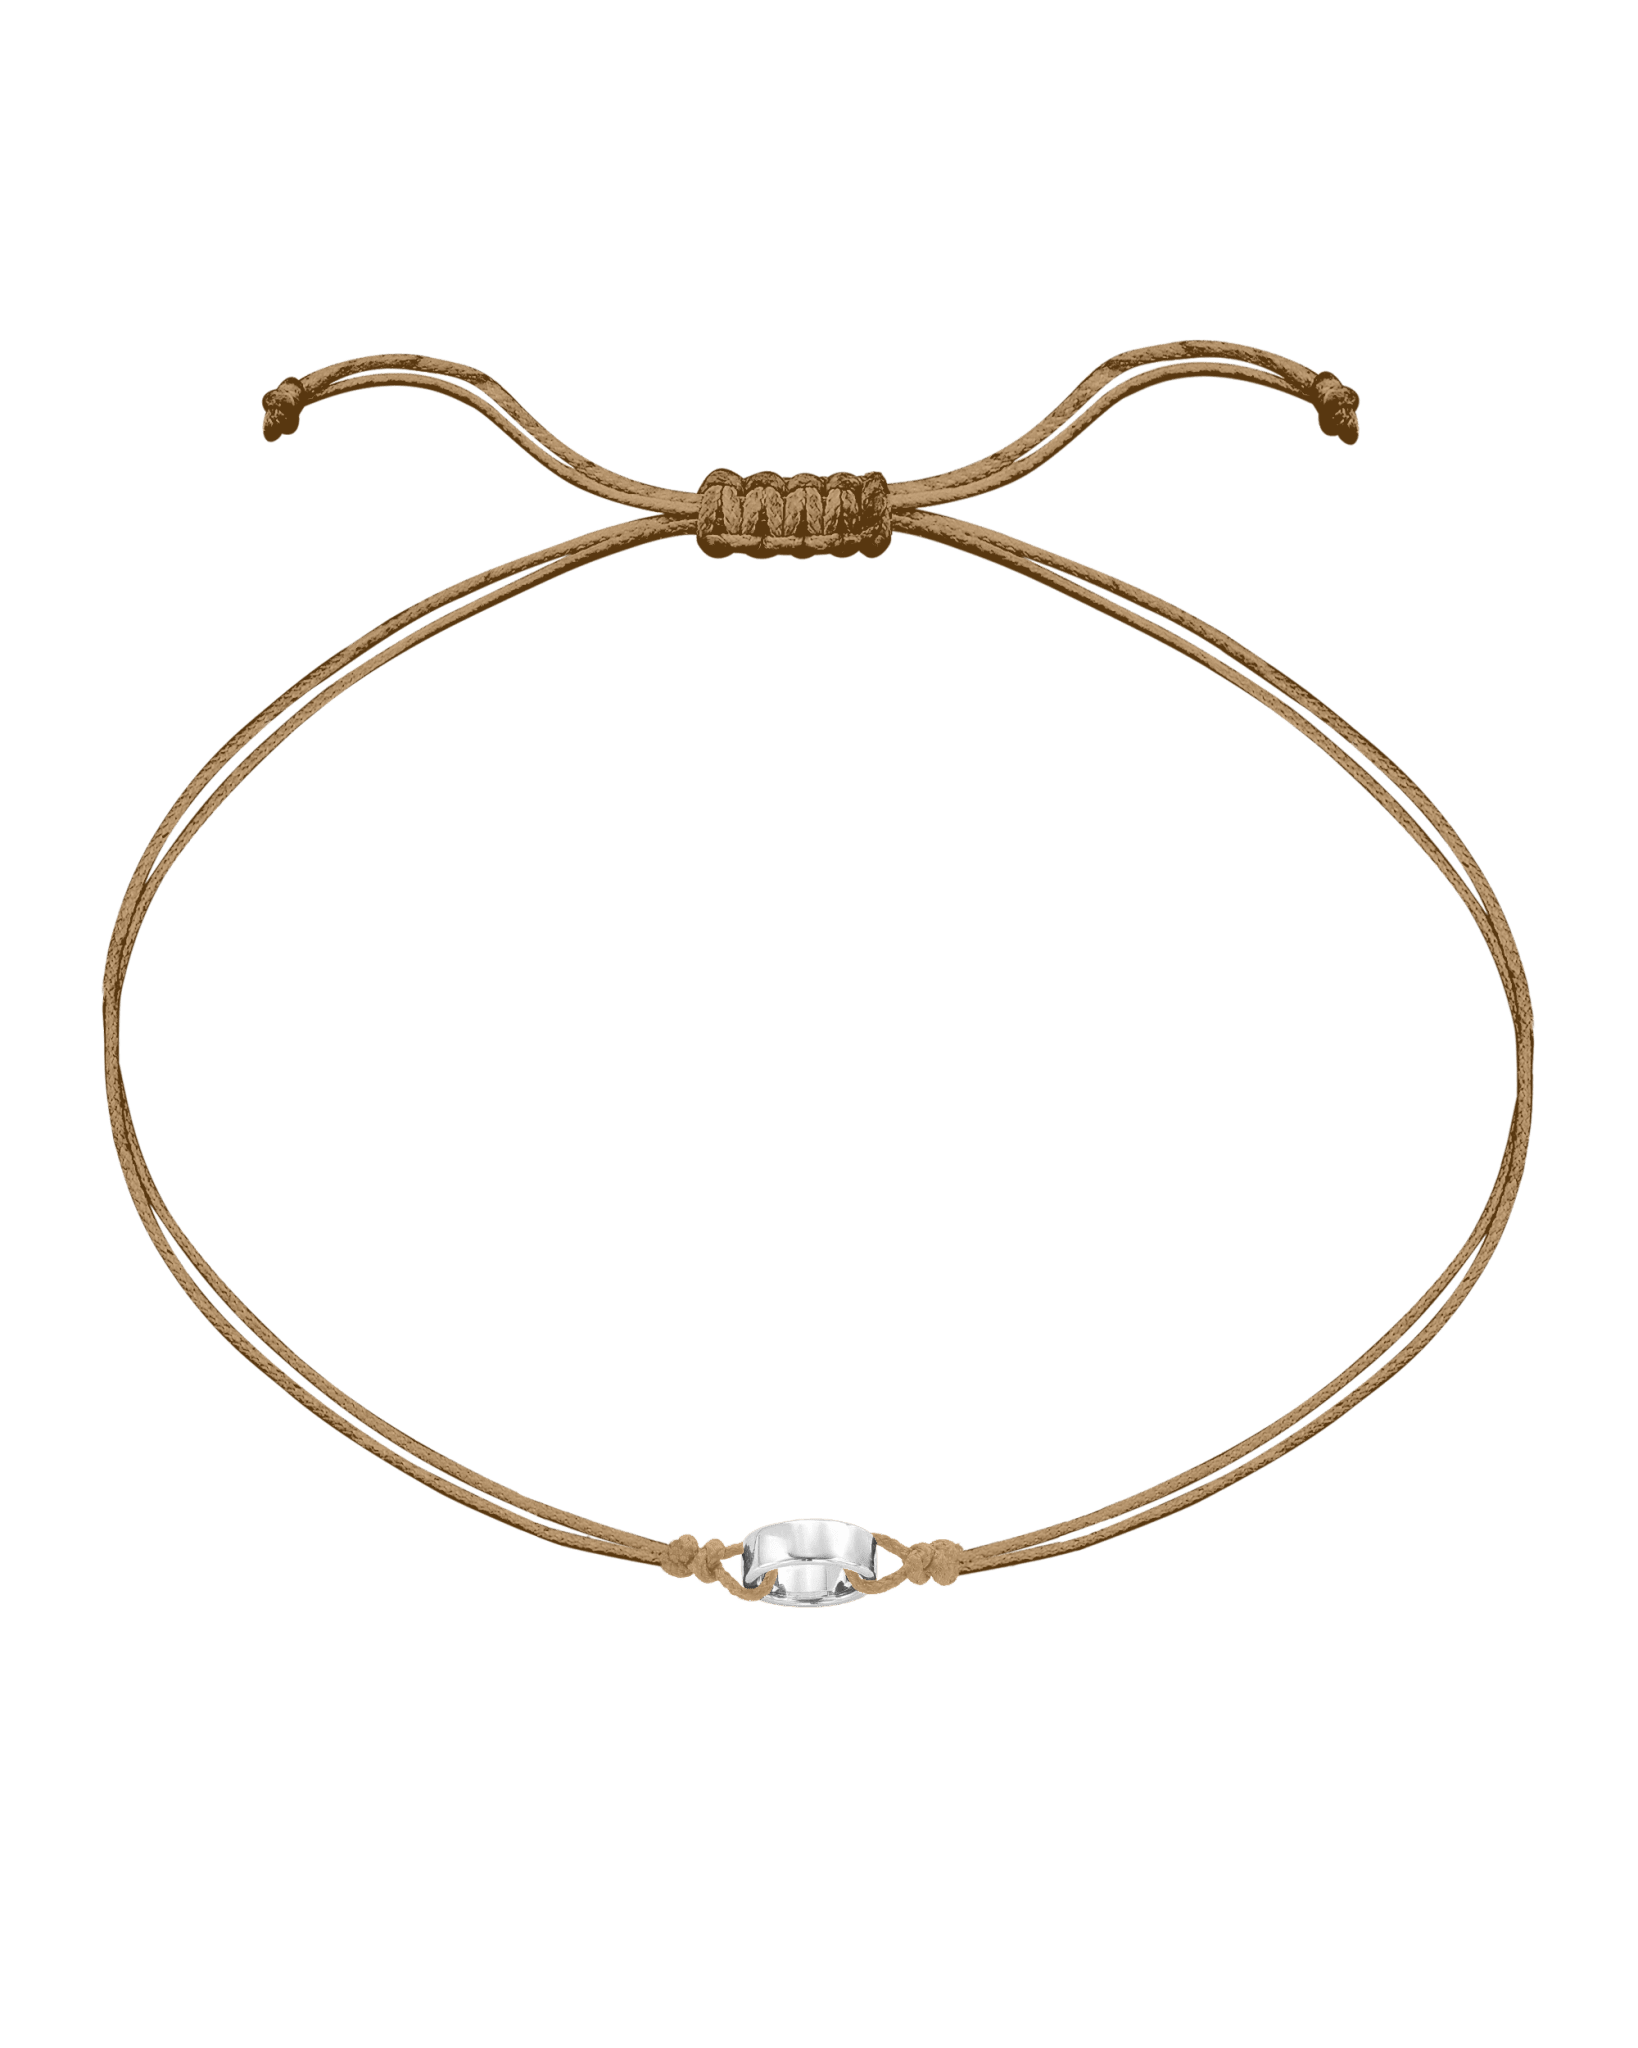 Engravable Links of Love - 14K White Gold Bracelets magal-dev 1 Camel 